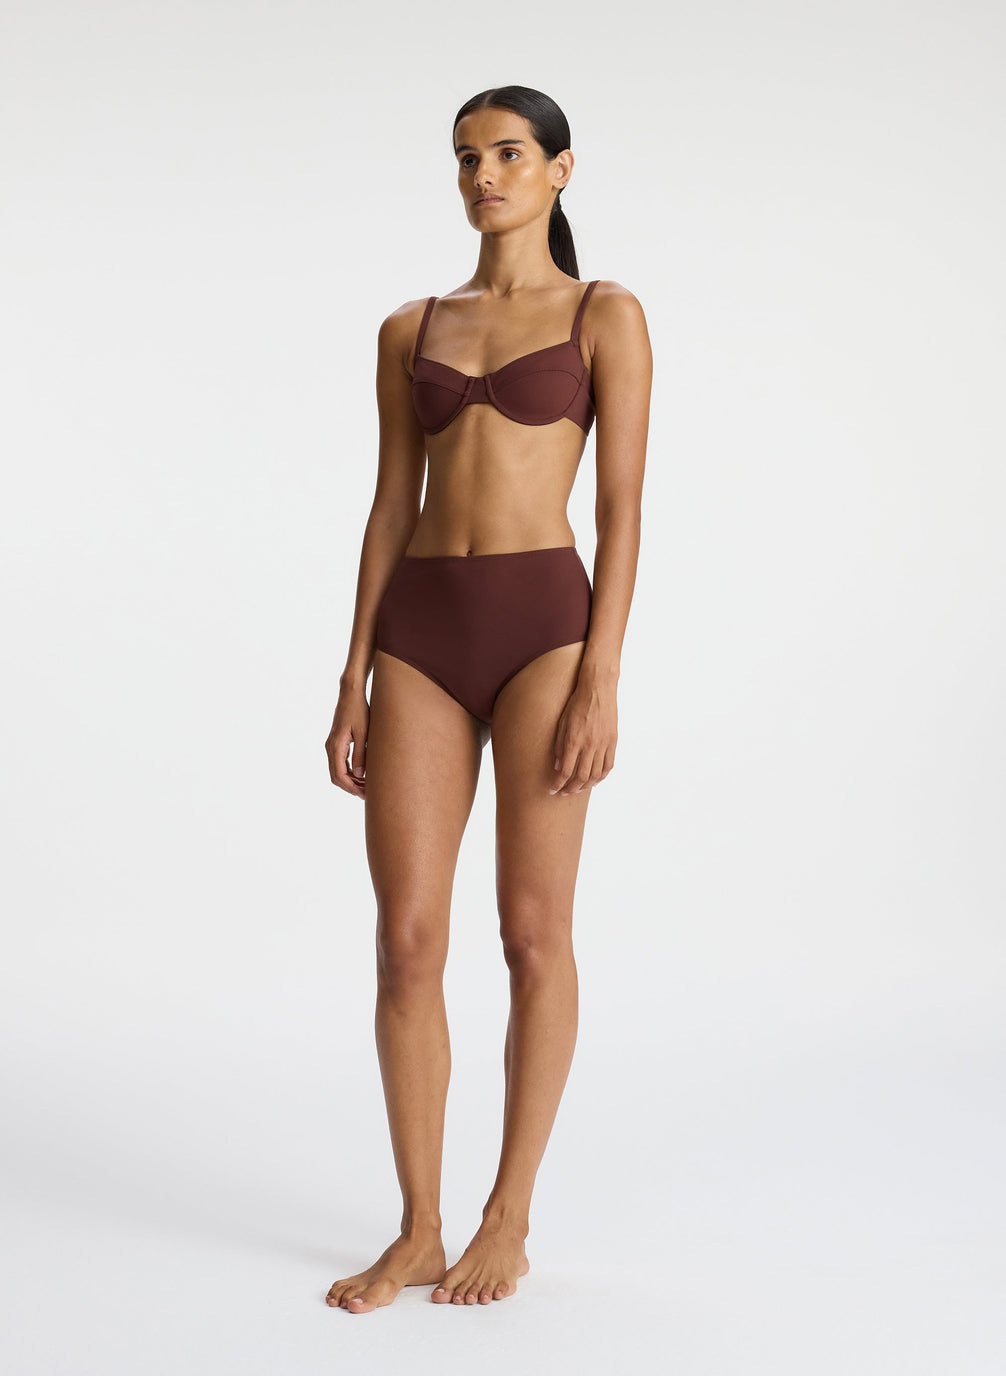 side view of woman wearing brown bikini set